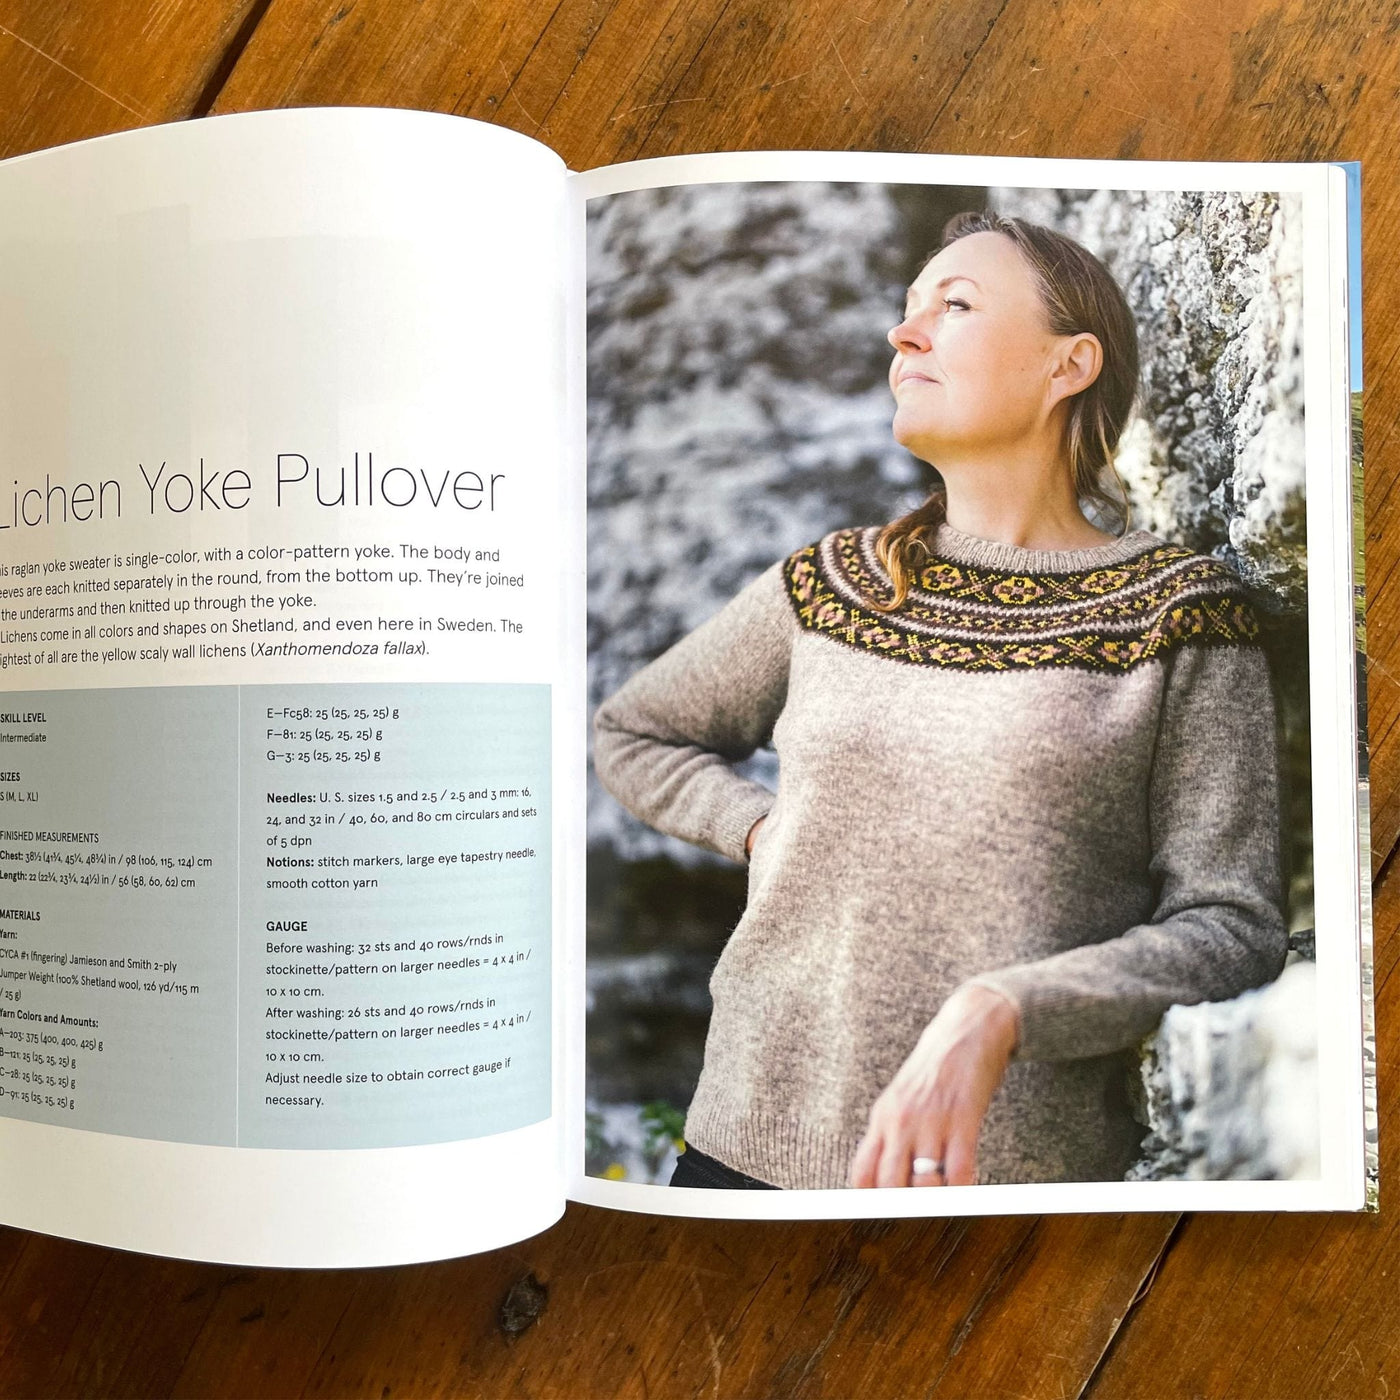 Lichen Yoke Pullover by Carina Olsson in 2ply Jumper